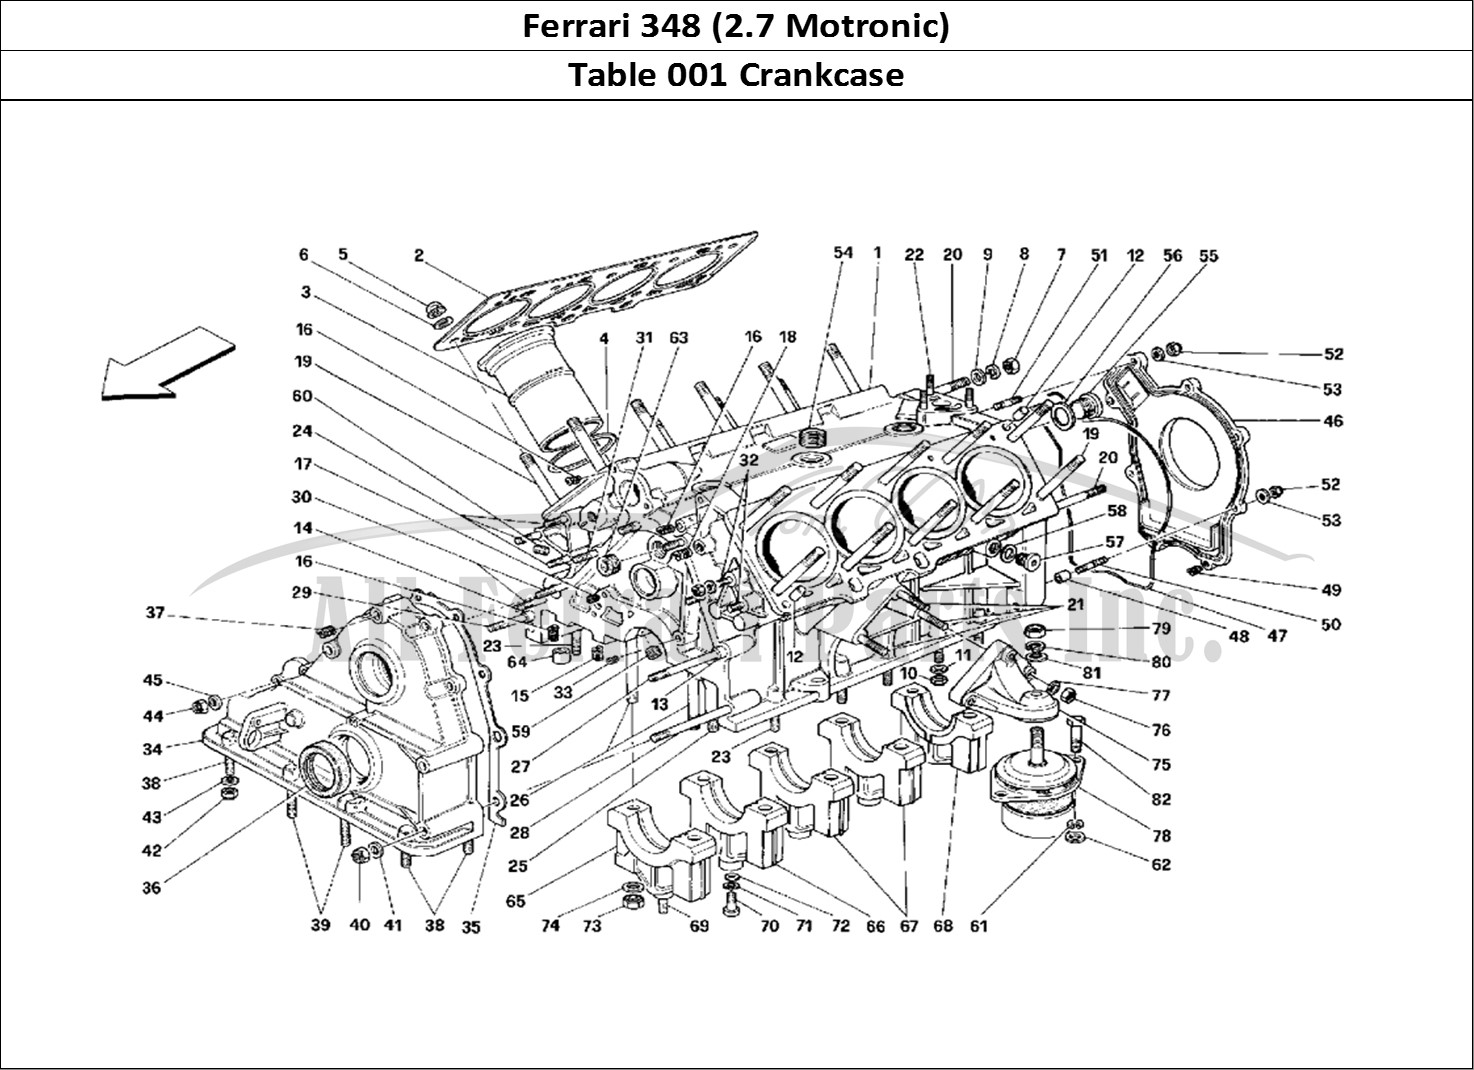 Ferrari Parts Ferrari 348 (2.7 Motronic) Page 001 Crankcase